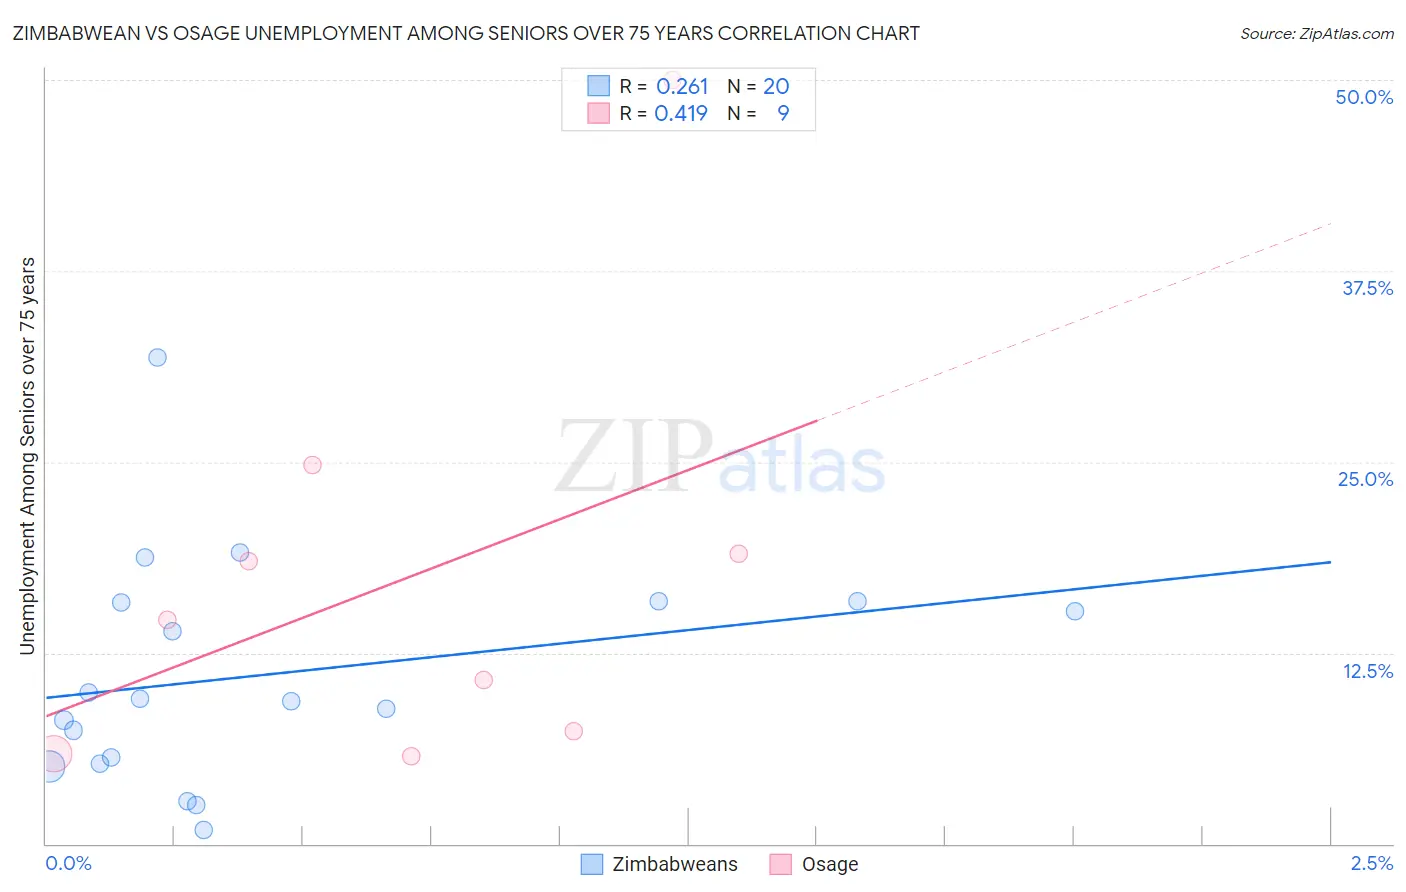 Zimbabwean vs Osage Unemployment Among Seniors over 75 years